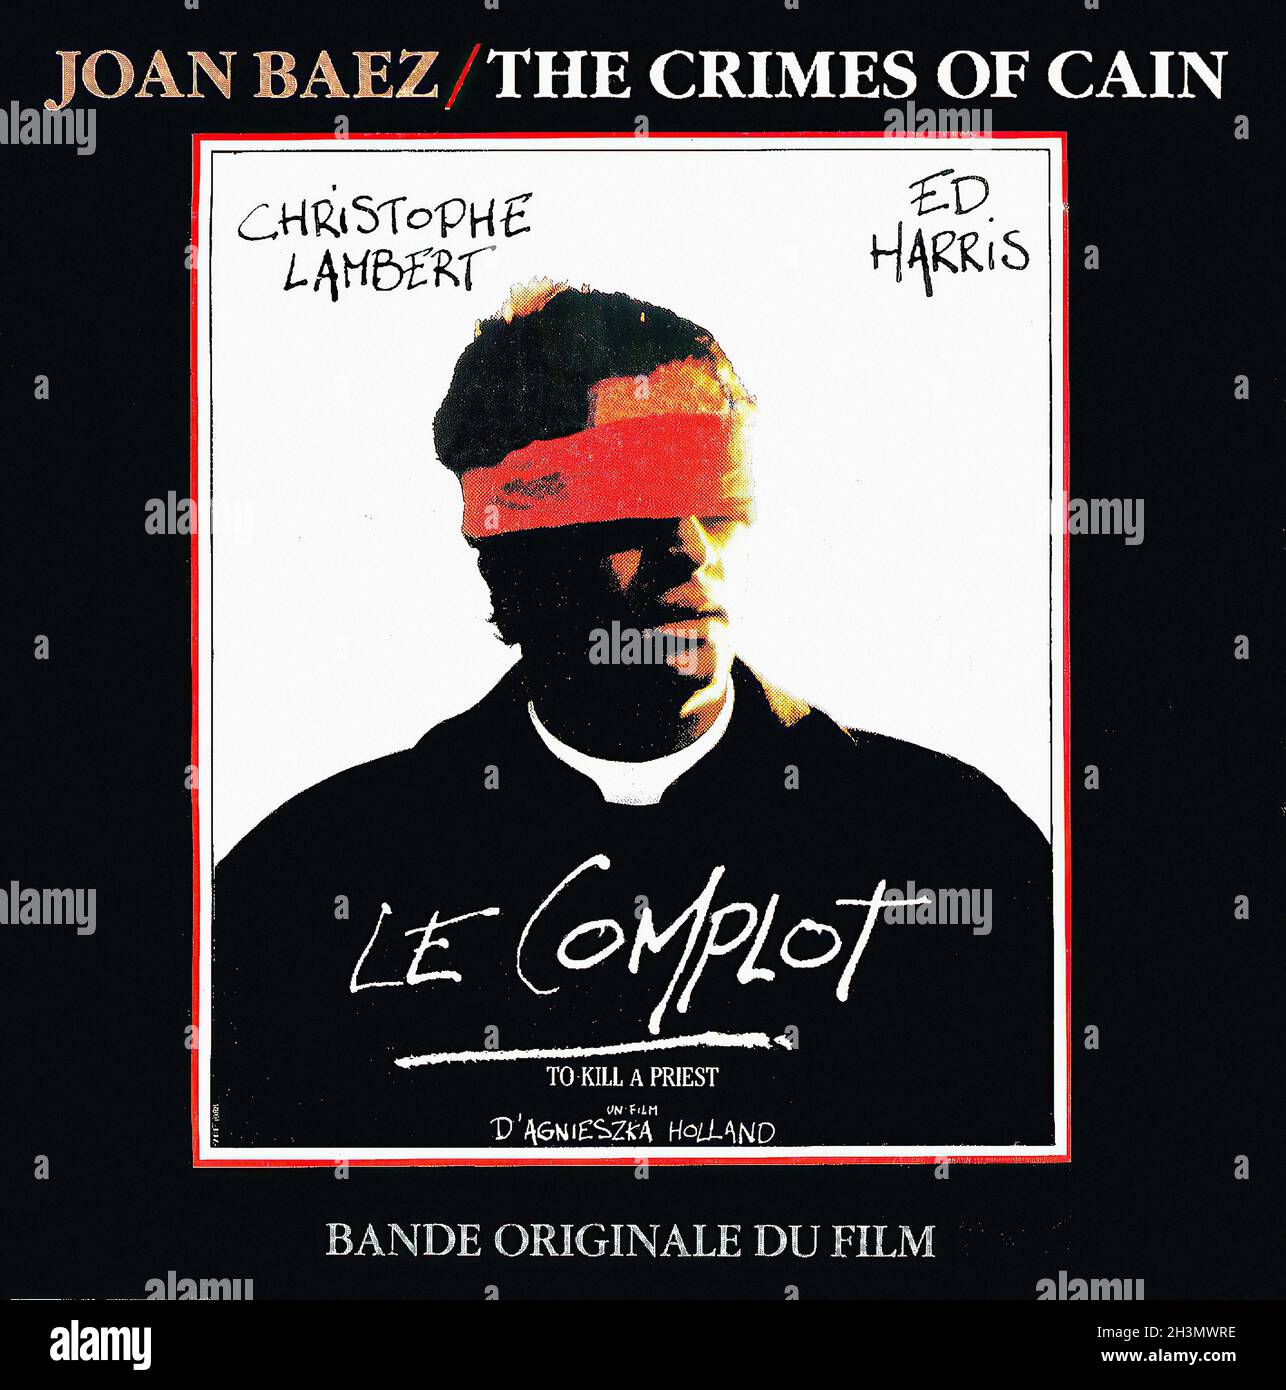 Vintage Vinyl Recording - To Kill A Priest - Le Complot - Crimes Of Cain -  Joan Baez - F - 1988 01 Stock Photo - Alamy